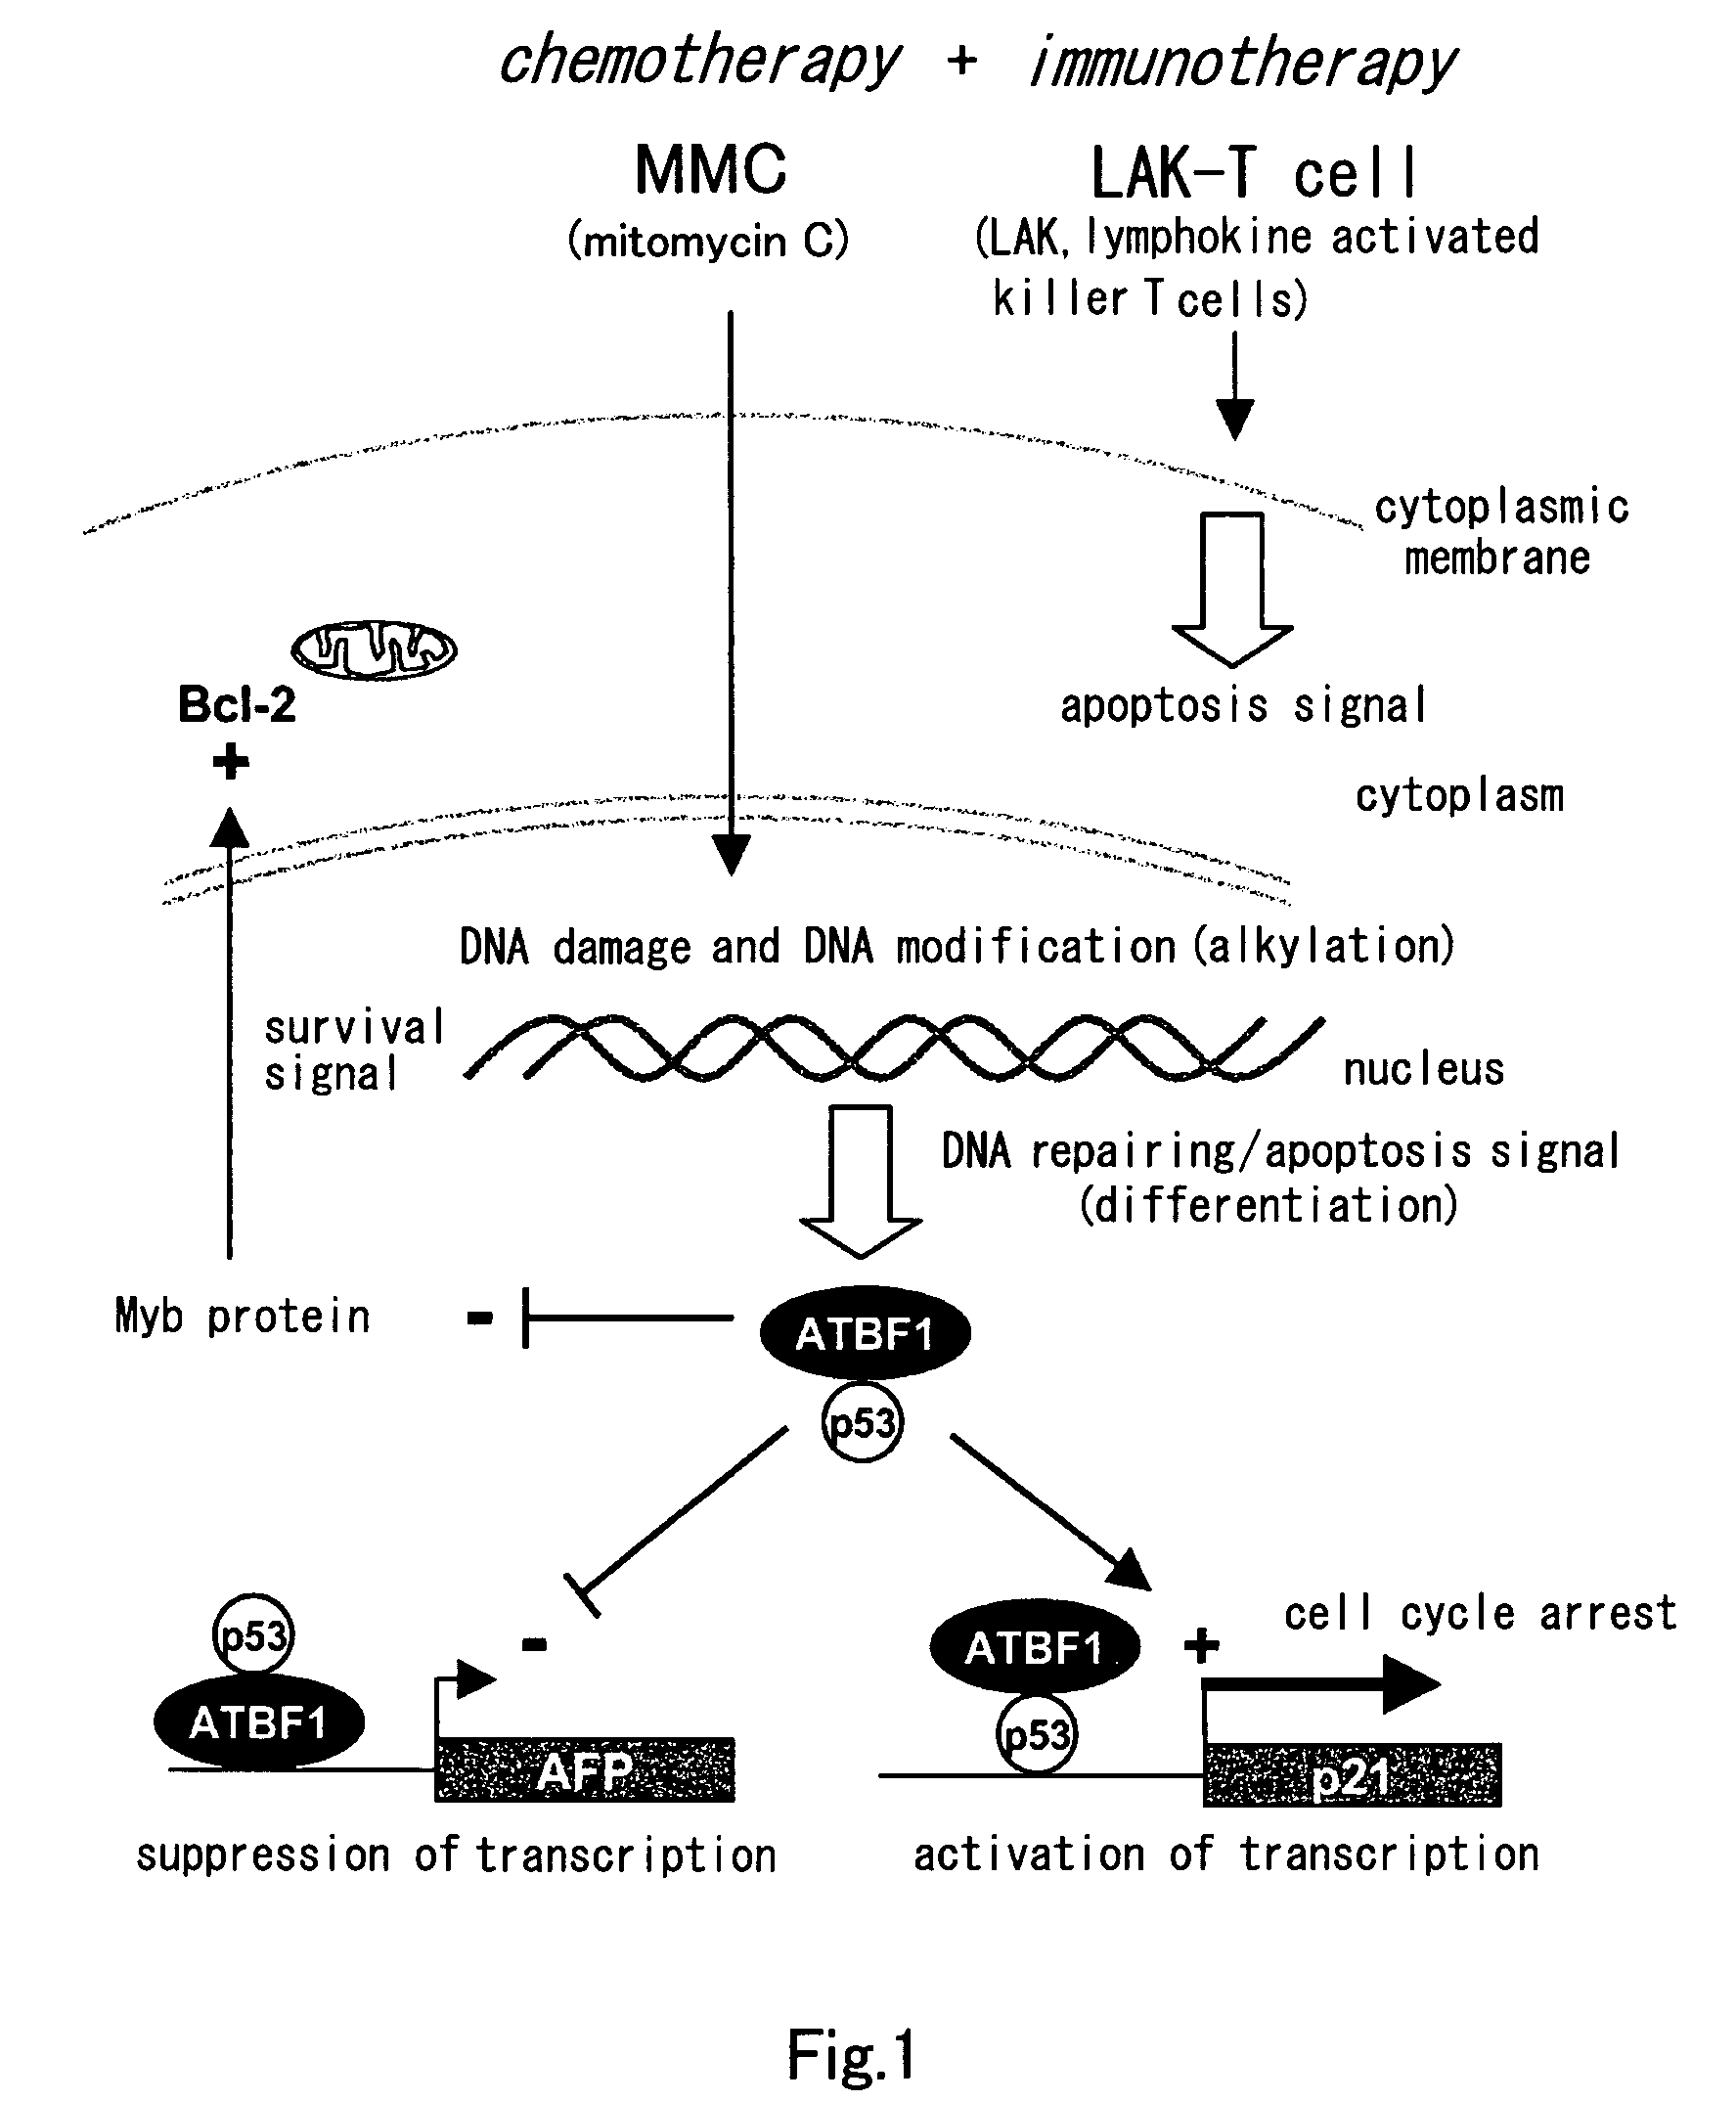 Method of judging grade of malignancy of carcinoma cell using ATBF-1